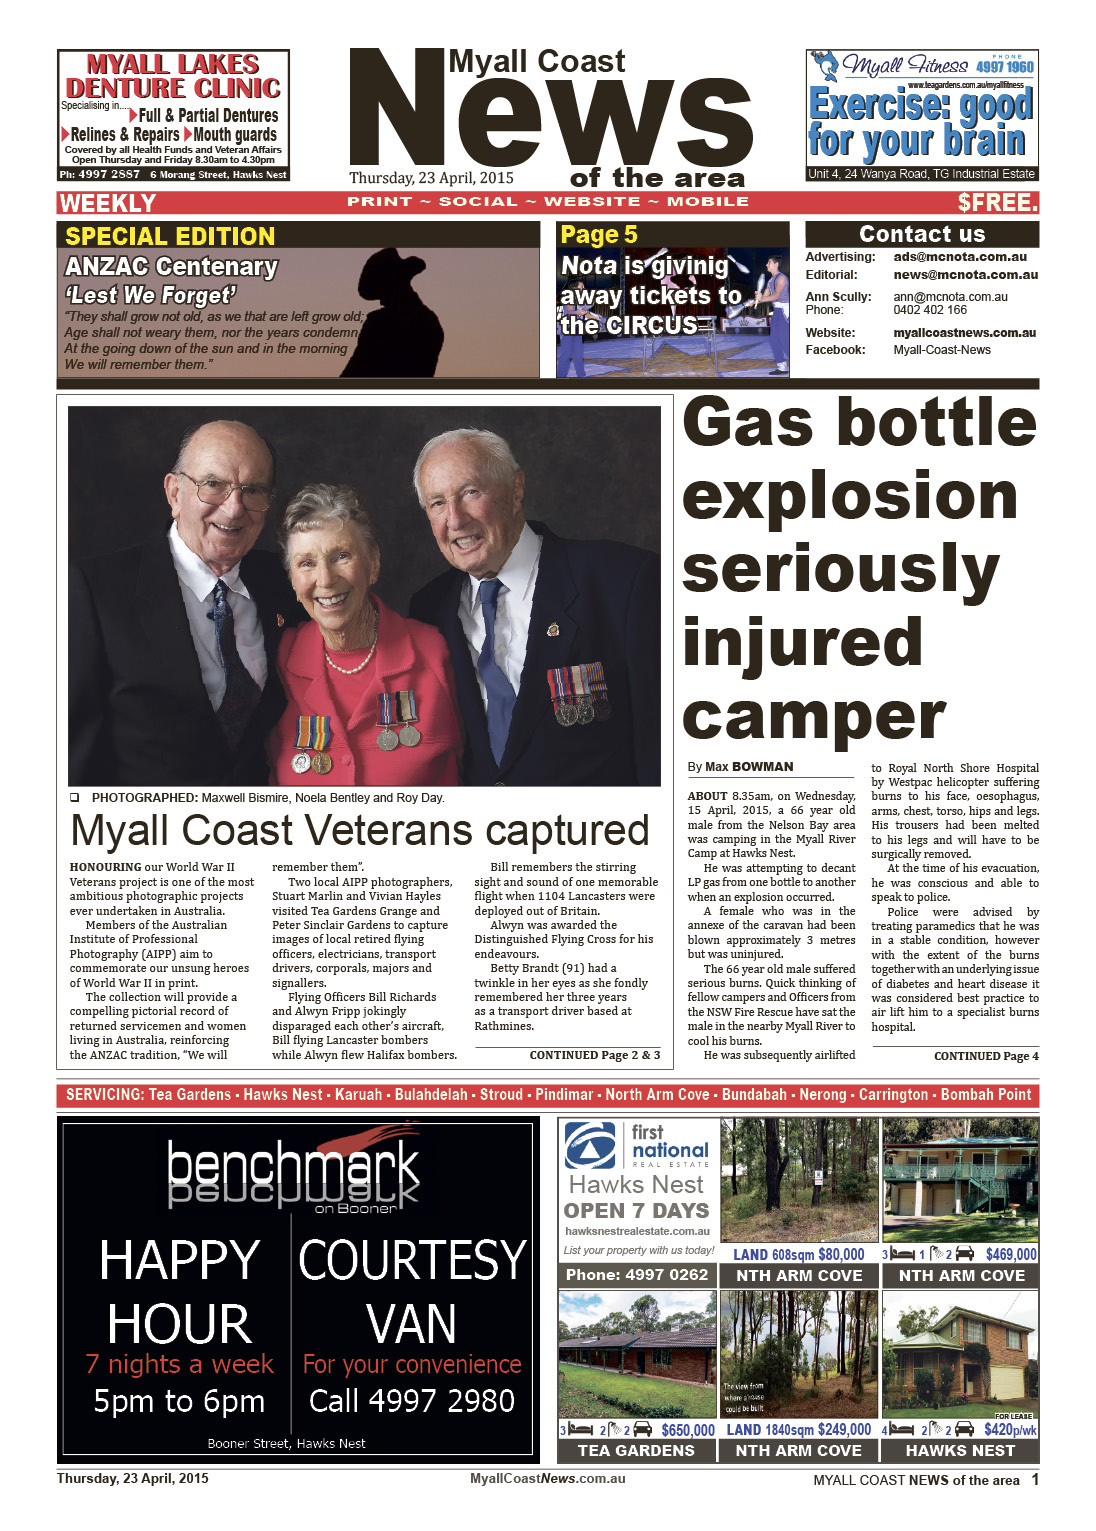 Myall Coast News edition 23 April 2015